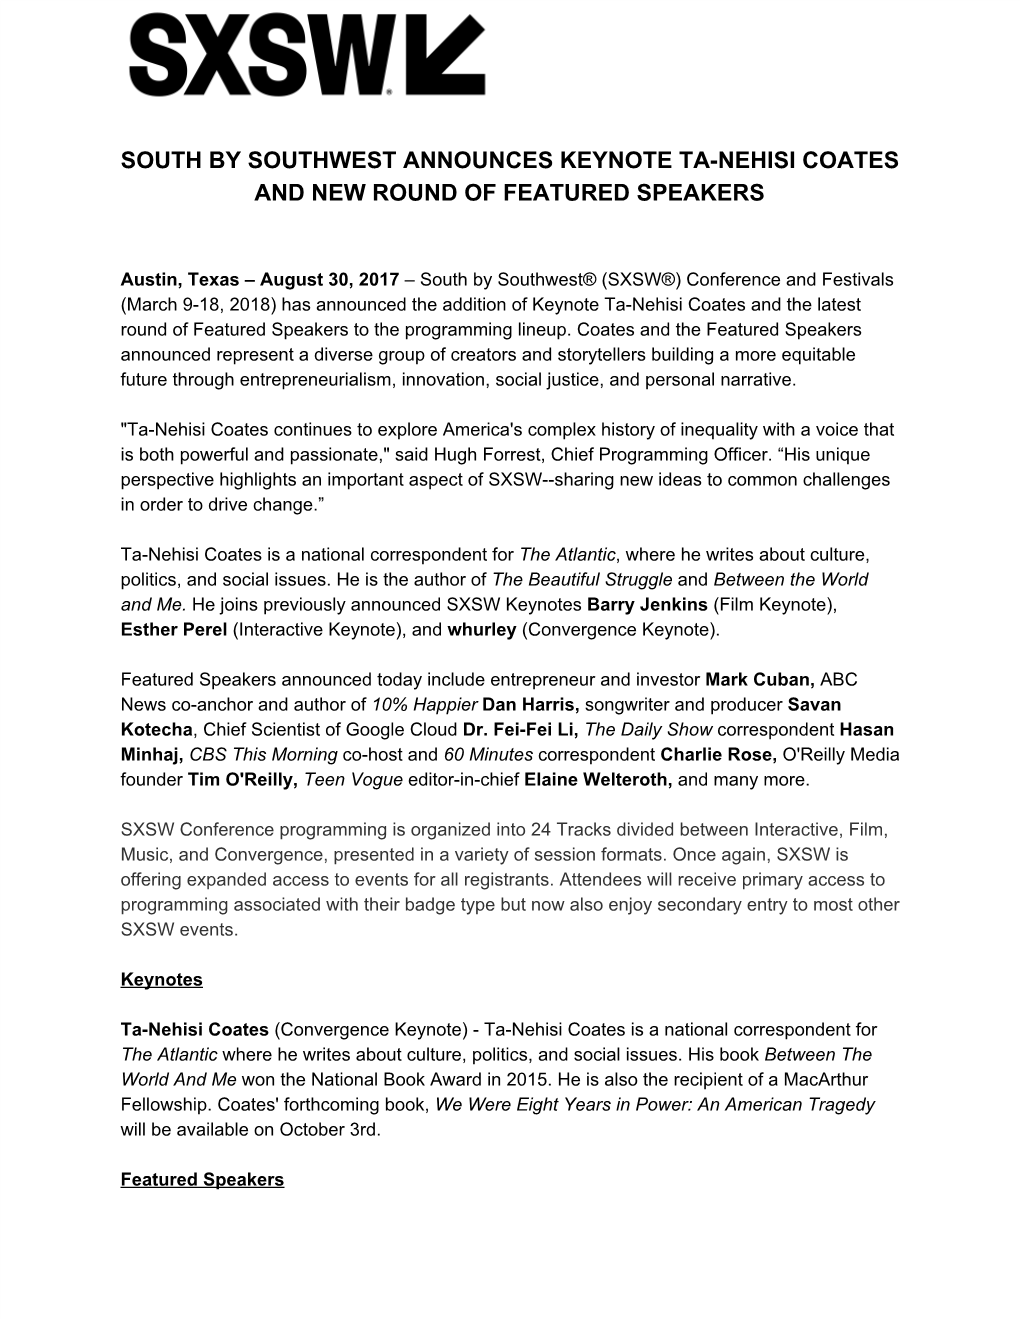 SXSW Announces Keynote Ta-Nehisi Coates and New Round Of